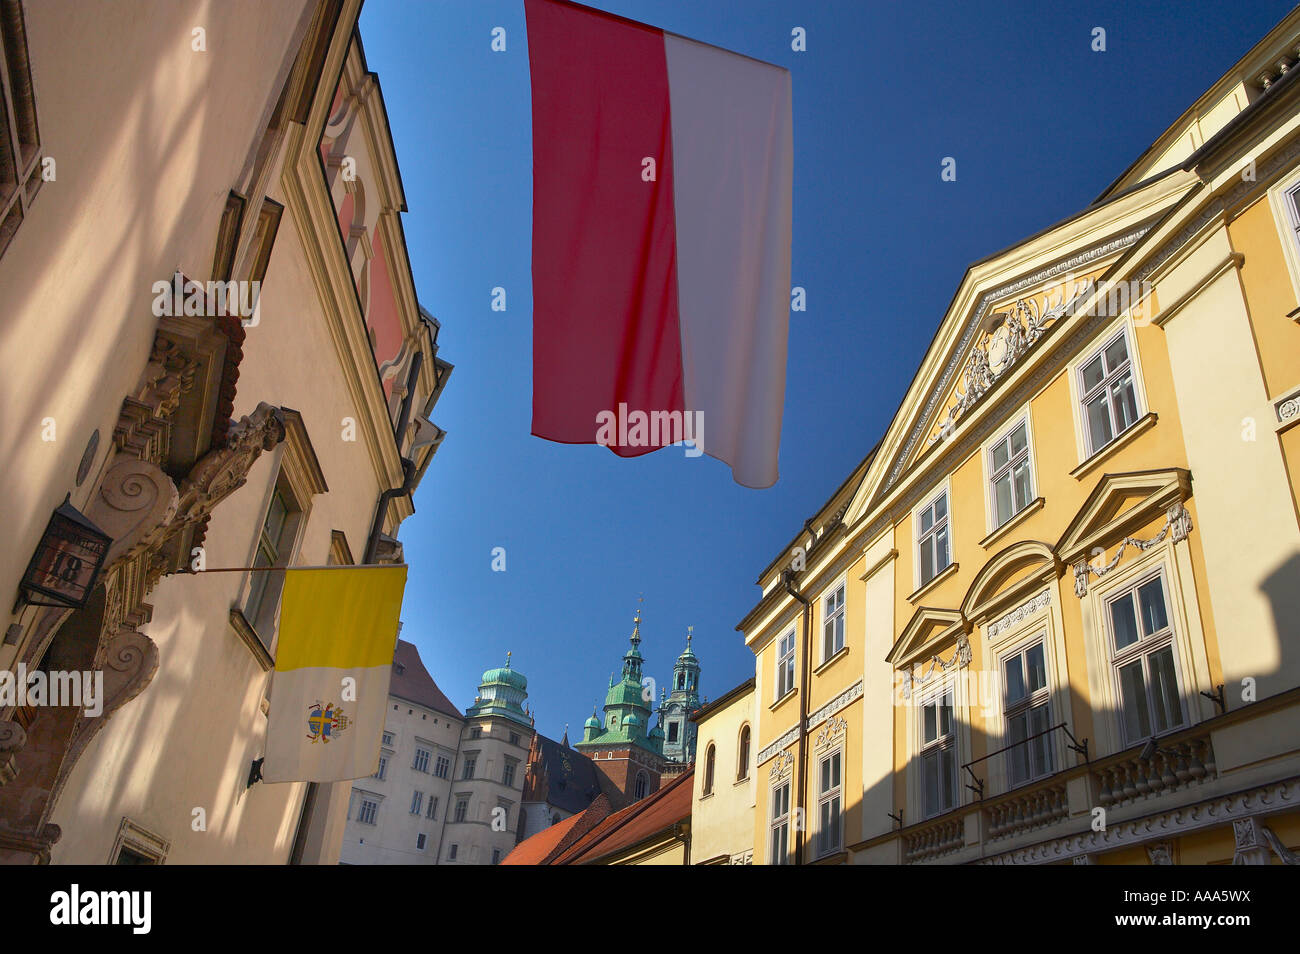 Ulica Kanonicza, Stare Miasto Old Town,  Wawel,  Krakow, Cracow, Poland Stock Photo